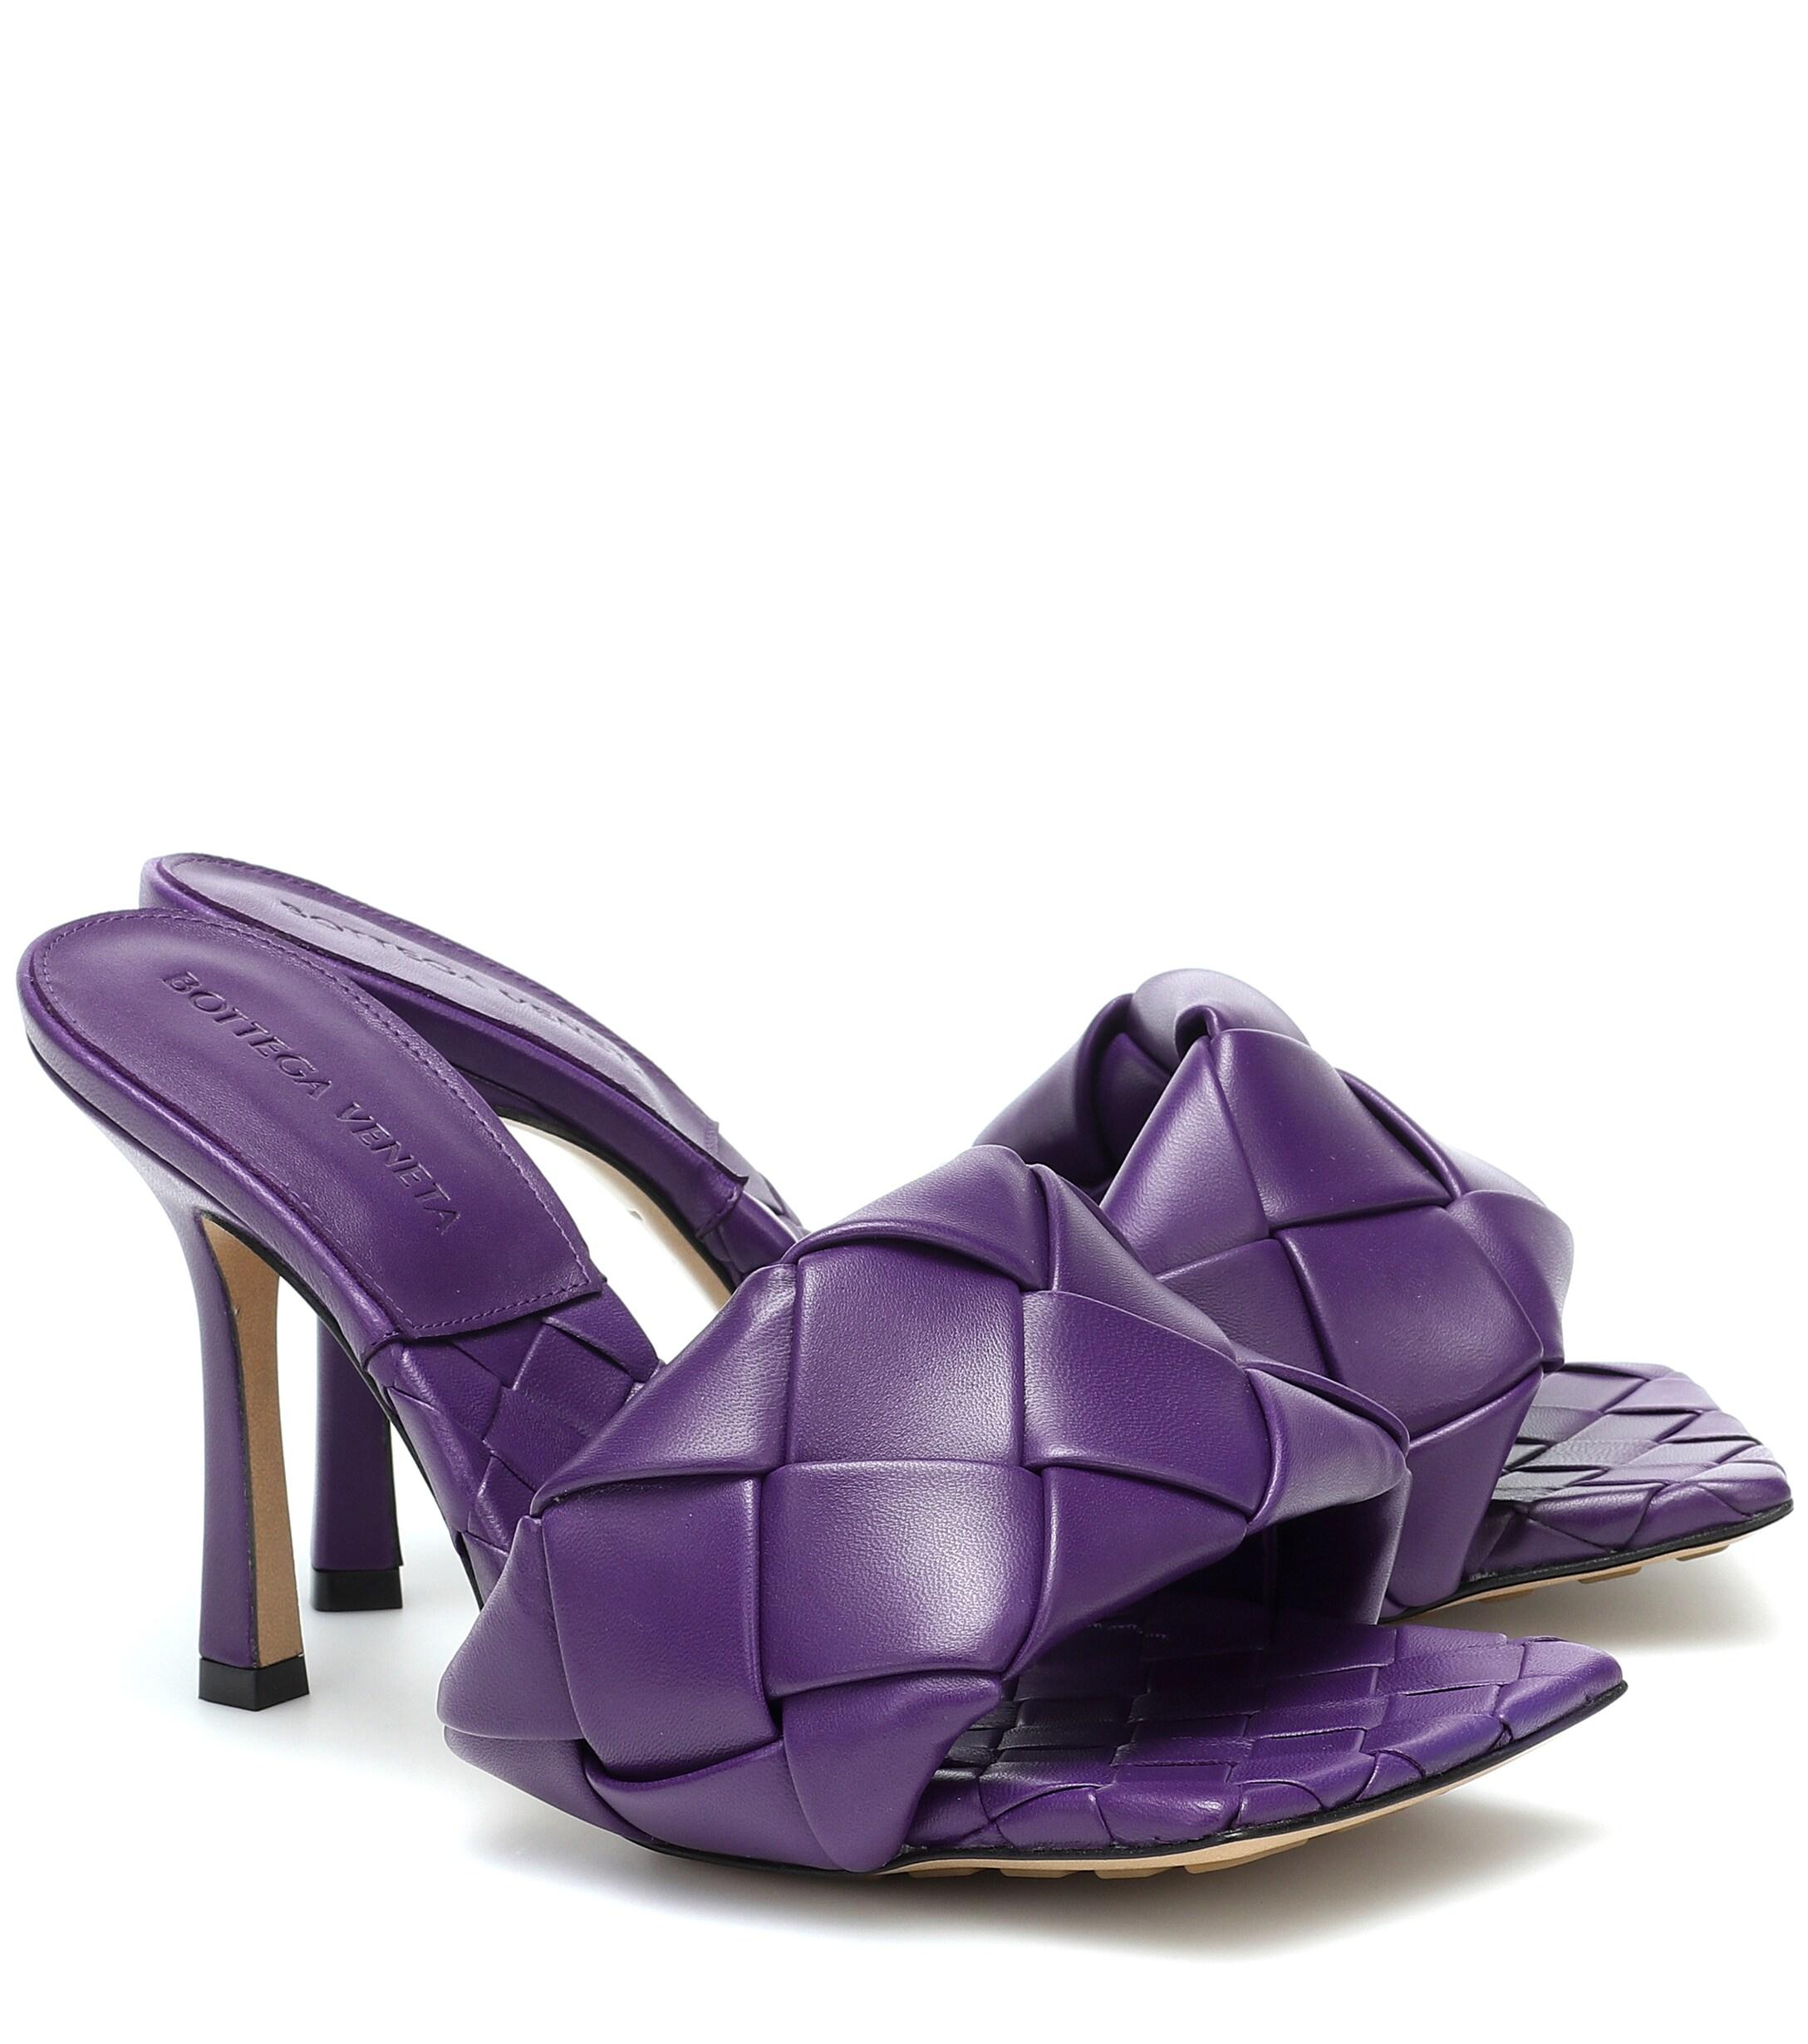 Bottega Veneta Bv Lido Leather Sandals in Purple - Lyst